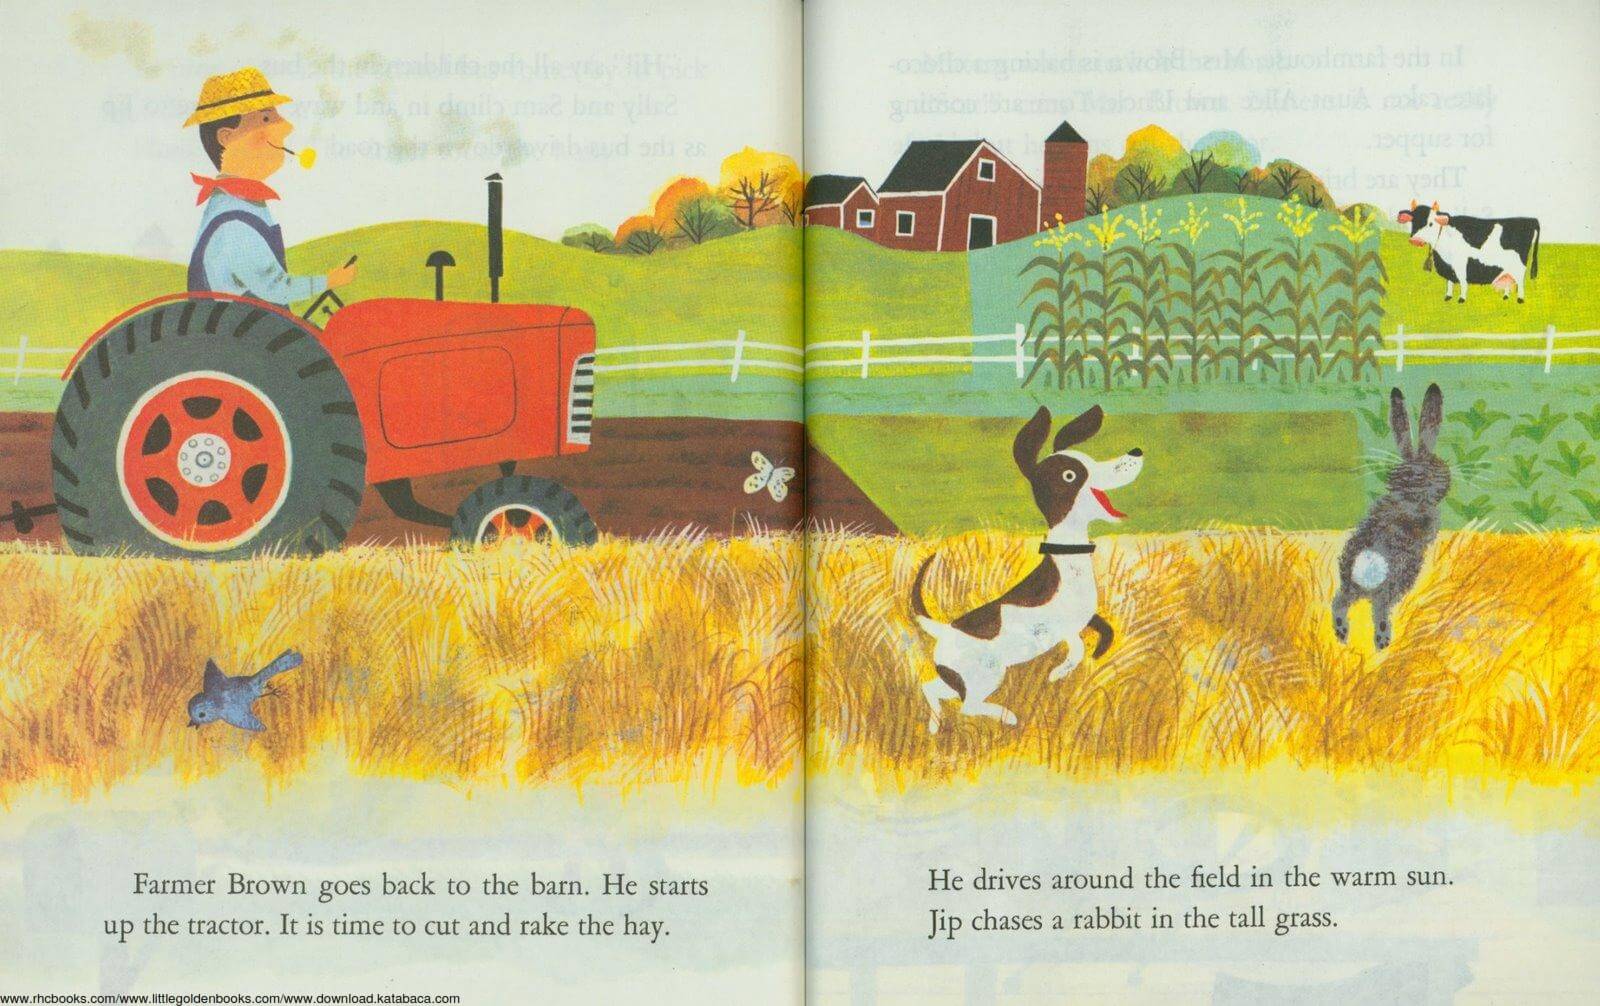 Ebook A Little Golden Book A Day on The Farm (8)